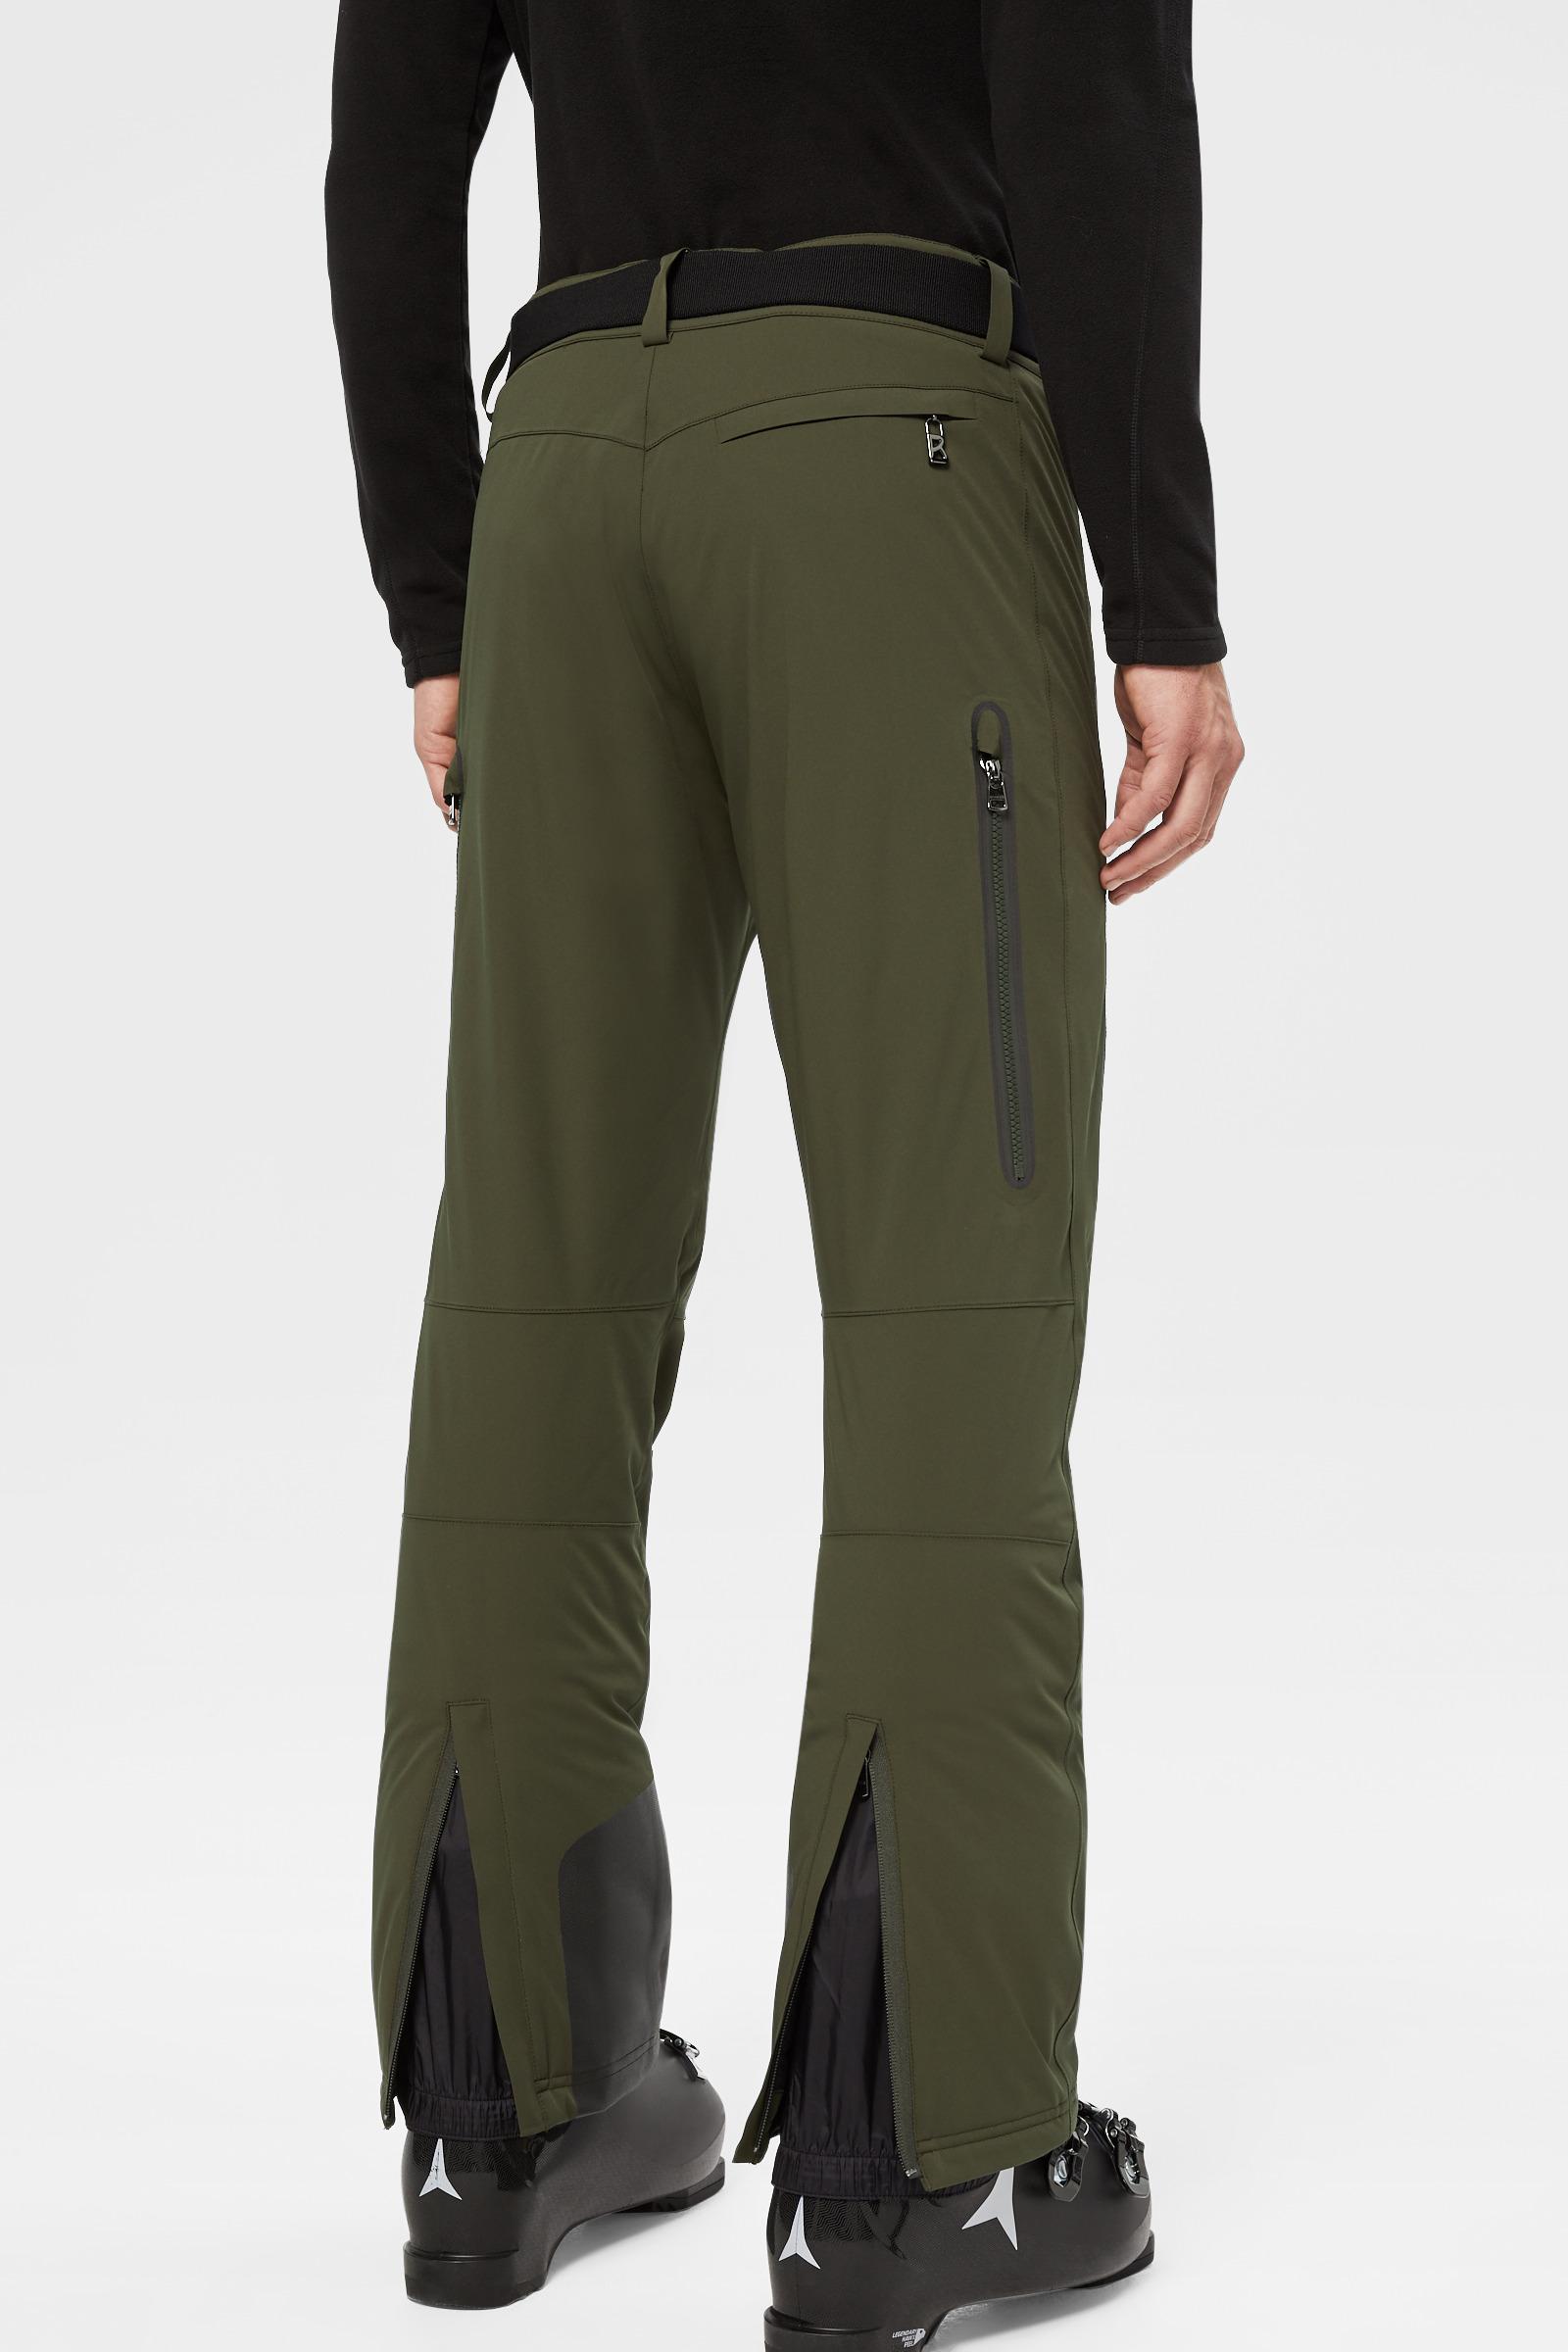 Bogner Tobi Ski Trousers In Olive Green for Men | Lyst Canada